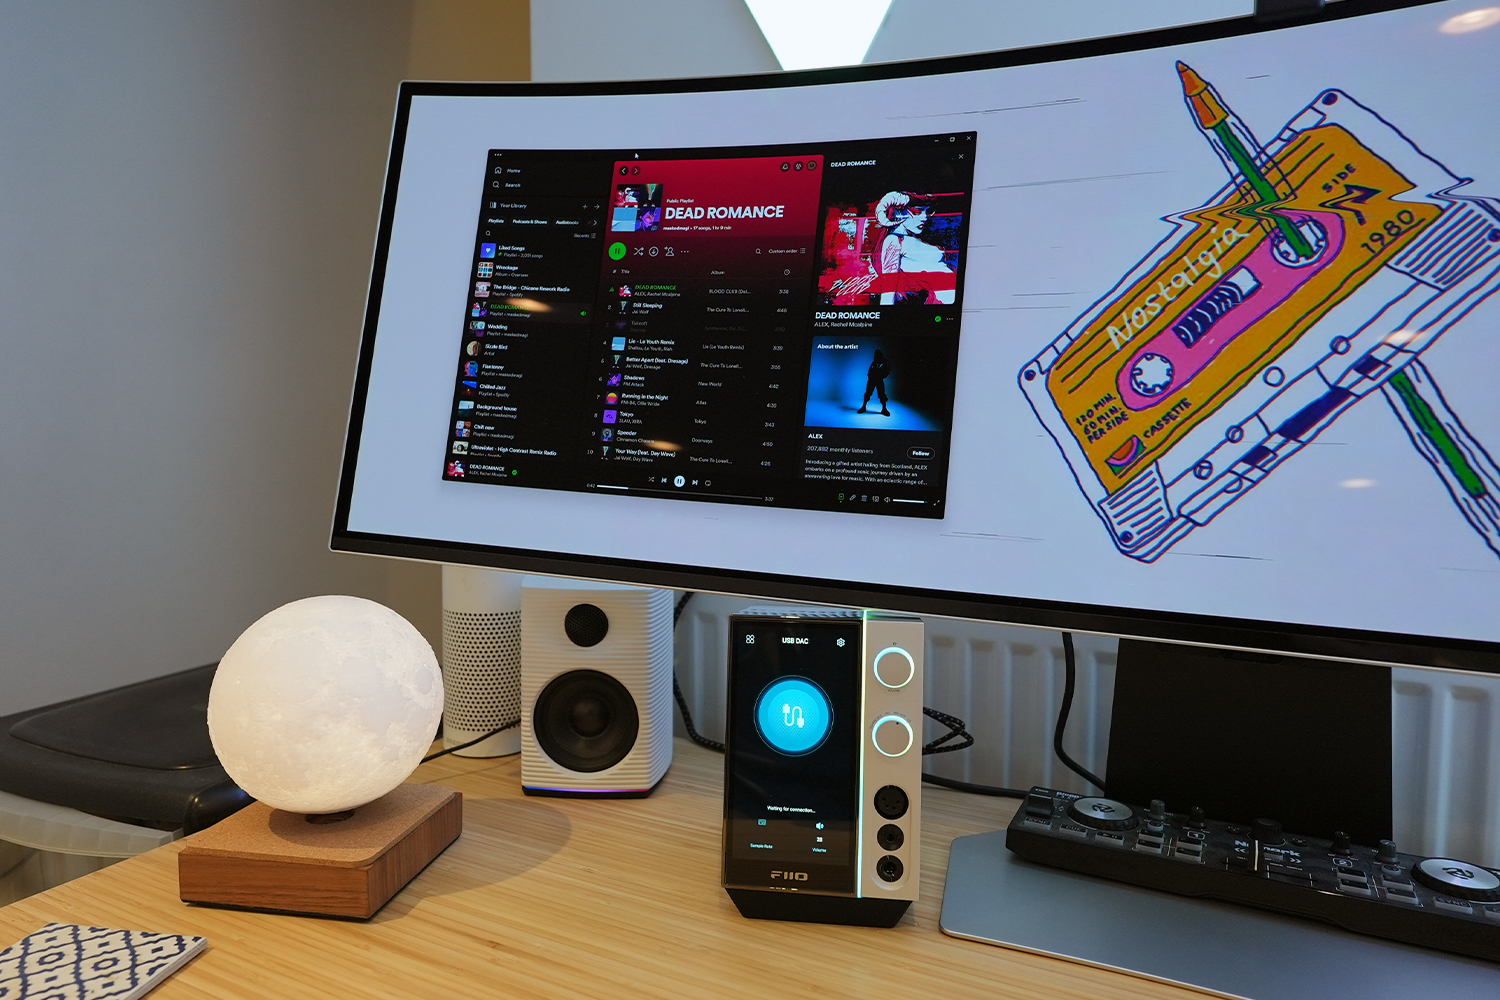 FiiO R9 review: the ultimate desktop Hi-Fi experience